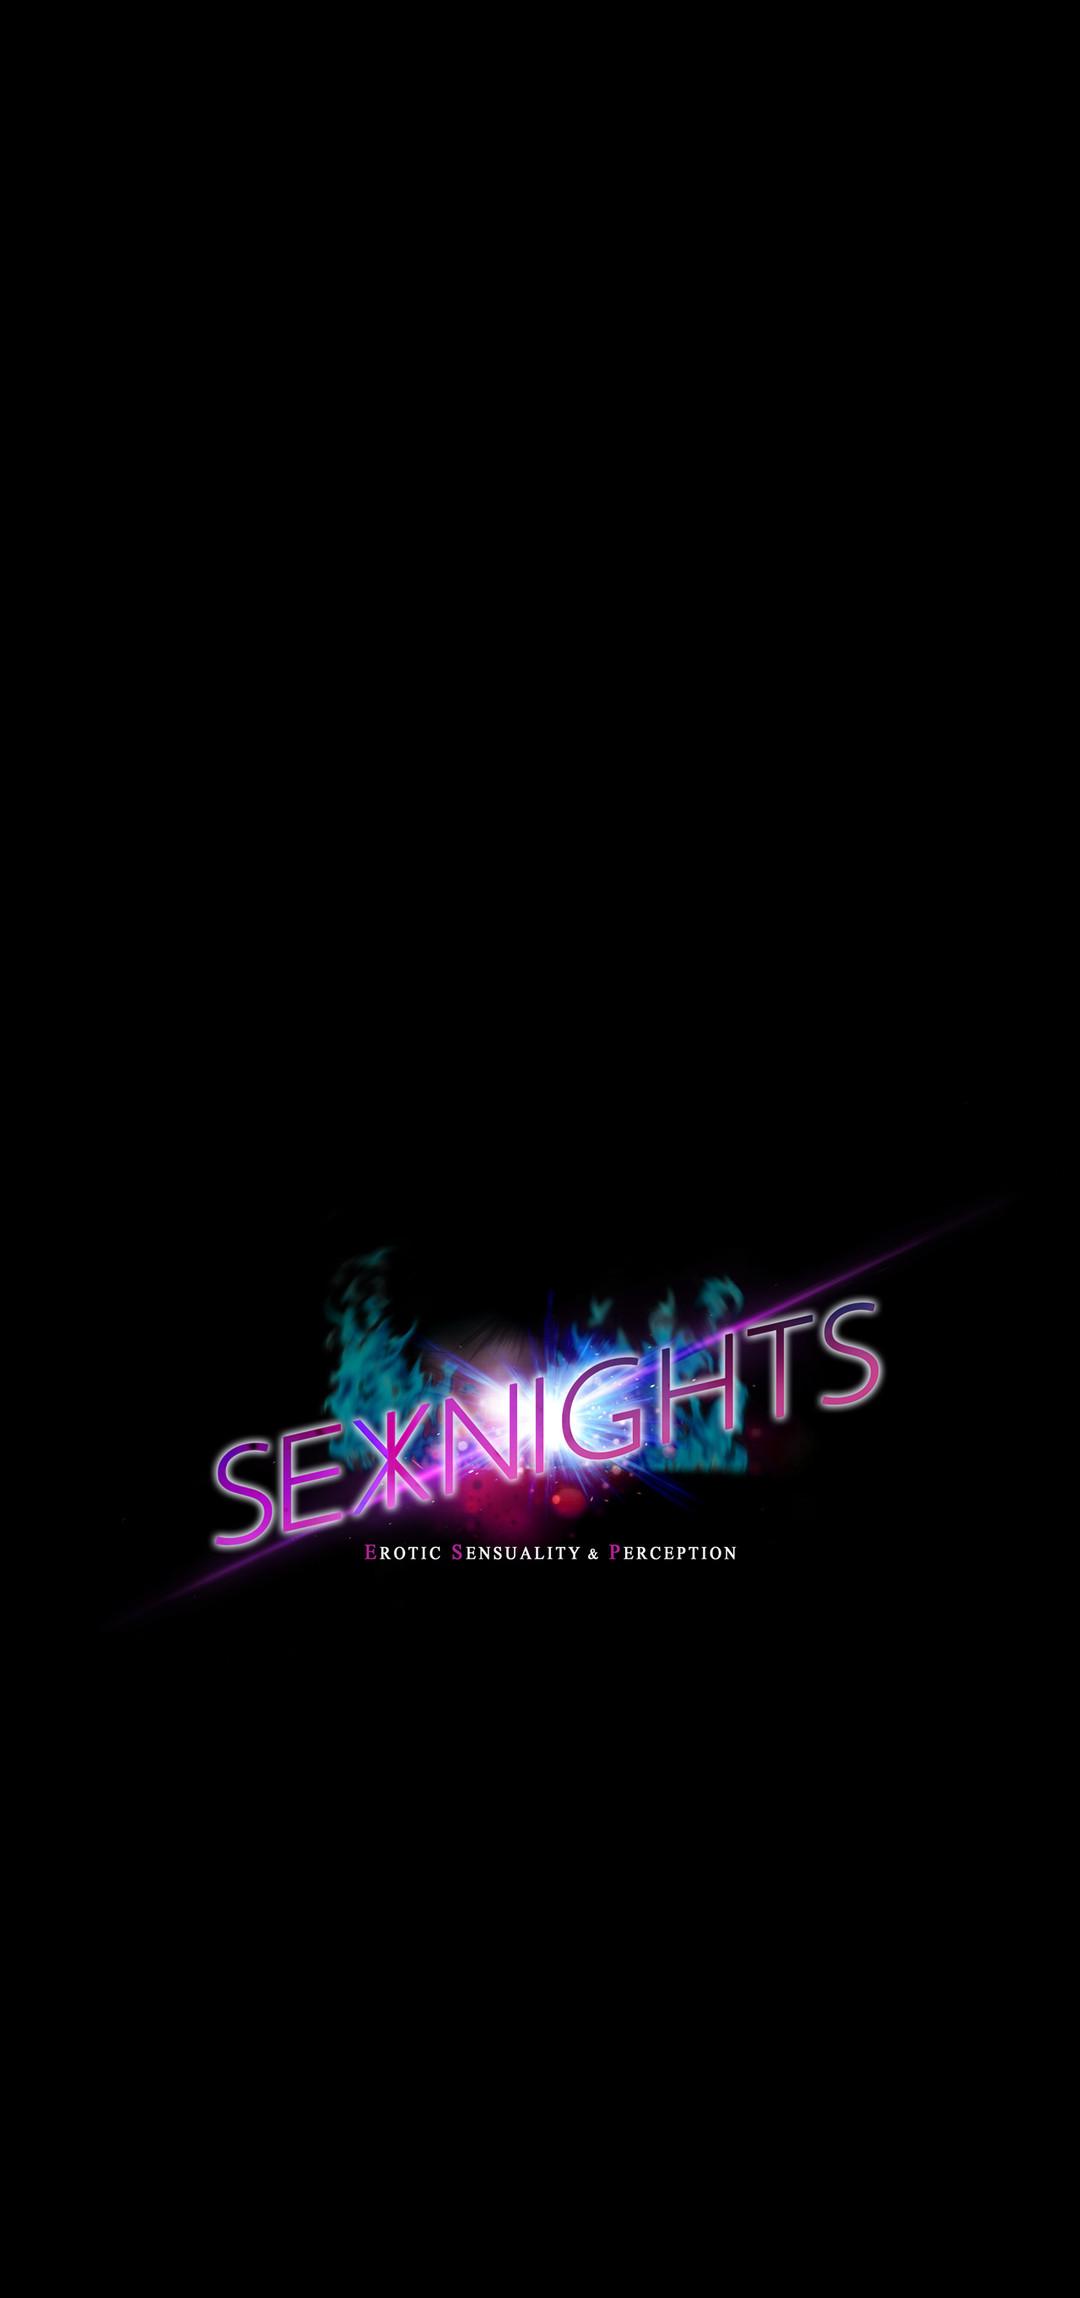 [BYMAN] Sex Knights-Erotic Sensuality & Perception Ch.1-15 (English) (Ongoing) 254